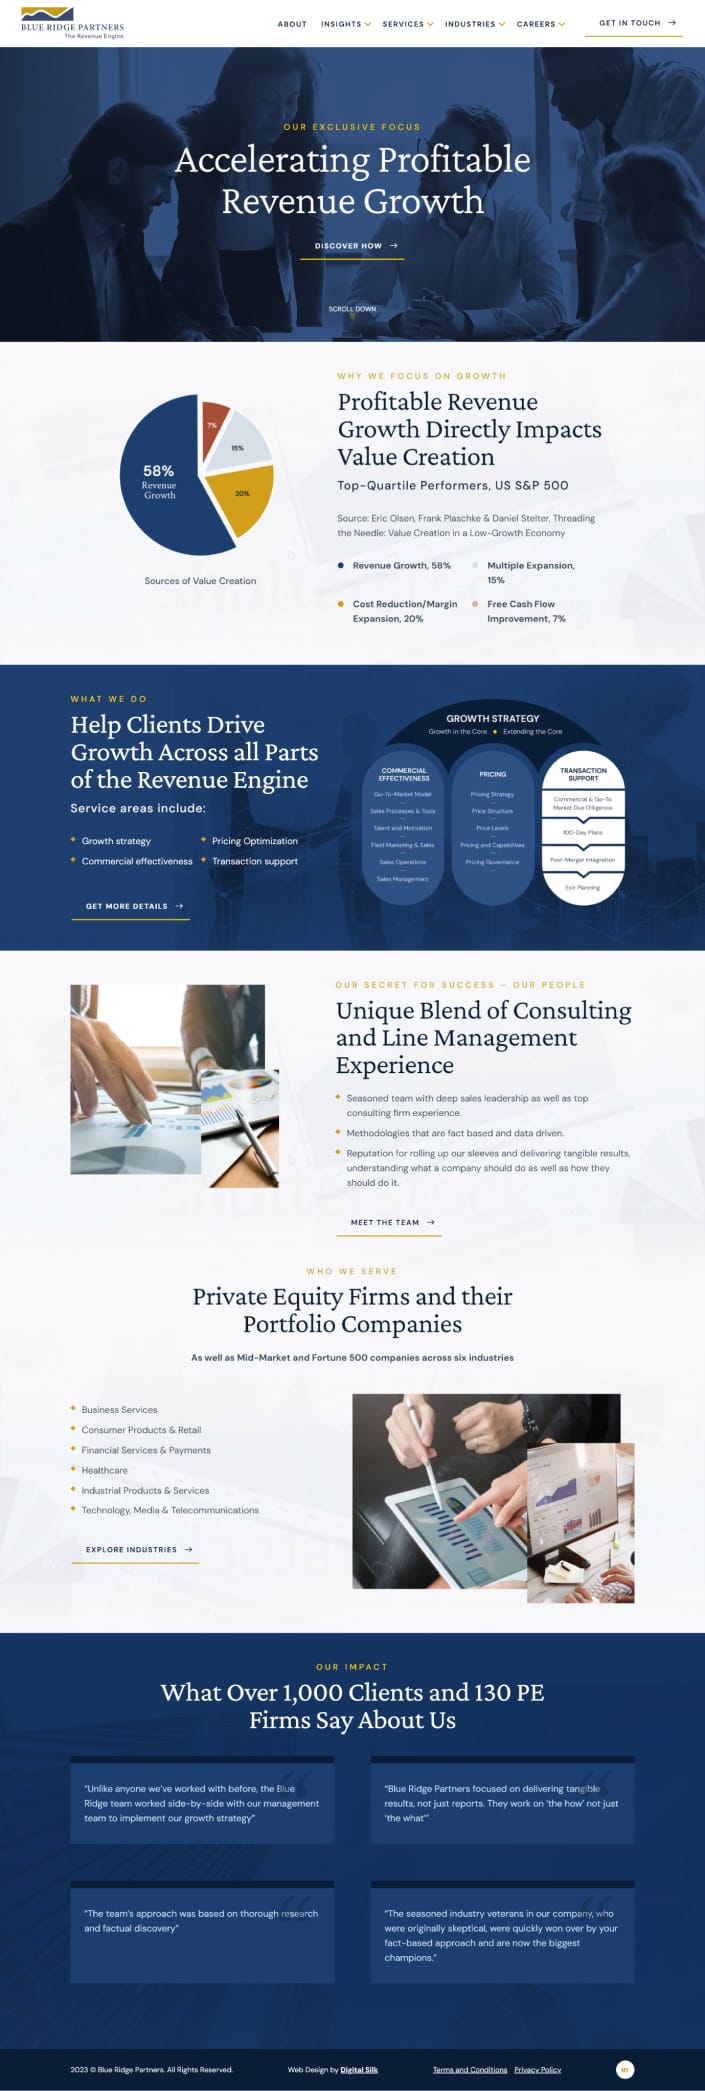 Blue Ridge Partners portfolio screenshot